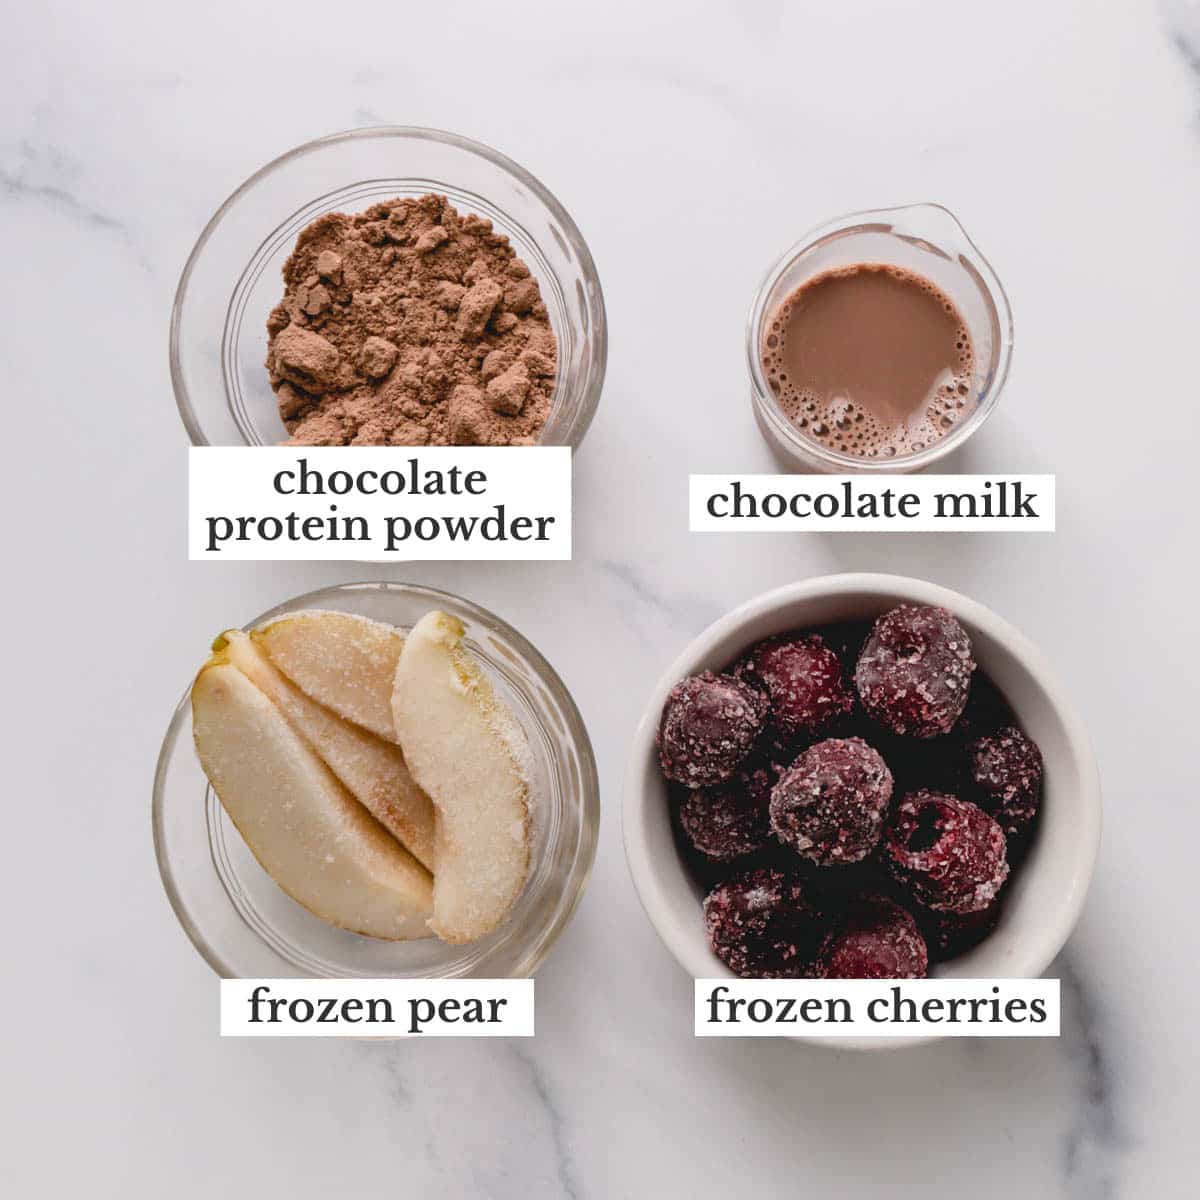 chocolate protein powder, chocolate milk, pear, and cherries.